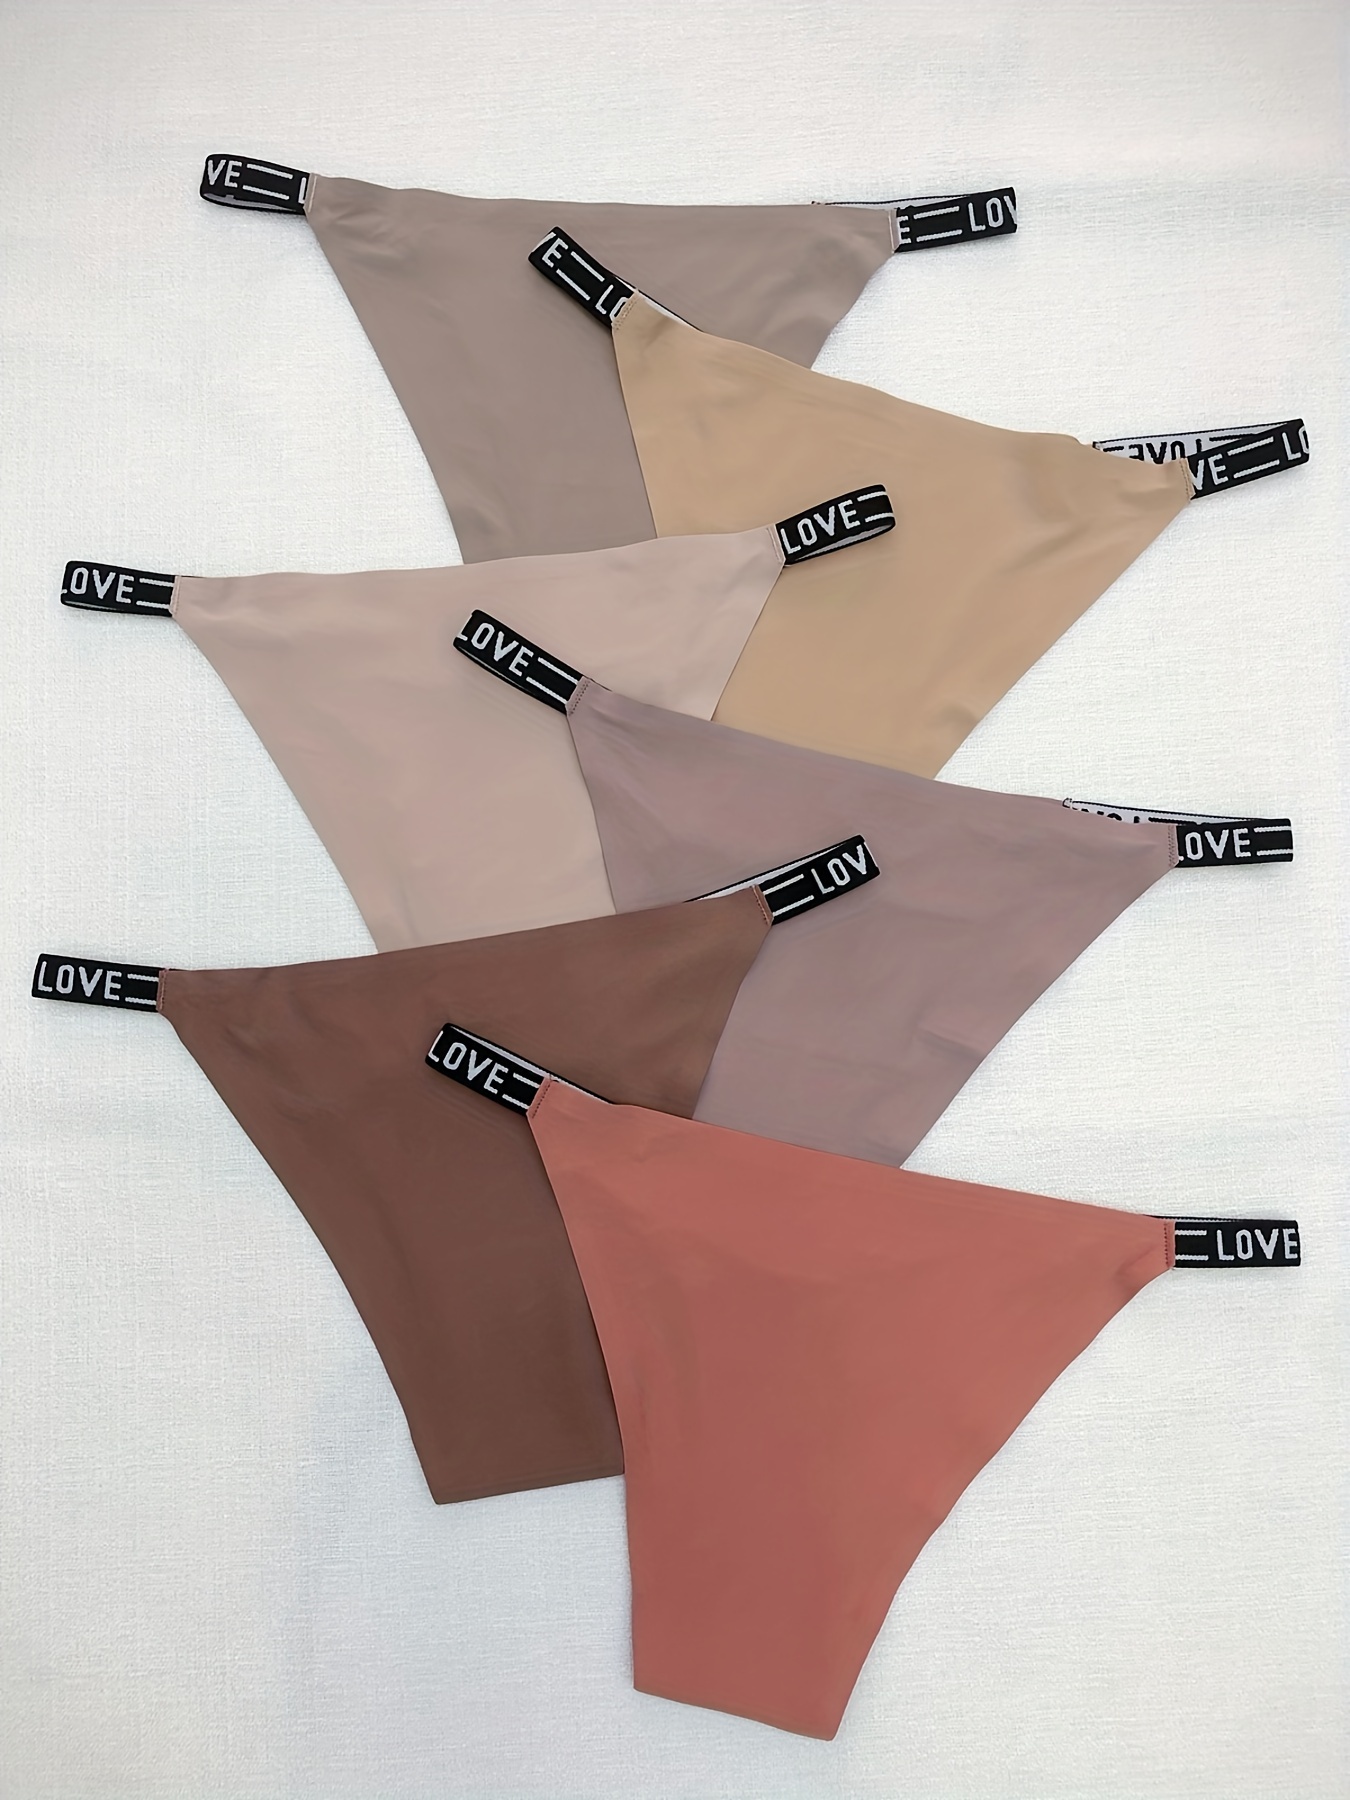 Women's Underwear Nylon Full Brief Panties - beige, black, white, blue,  pink - 5 Pack